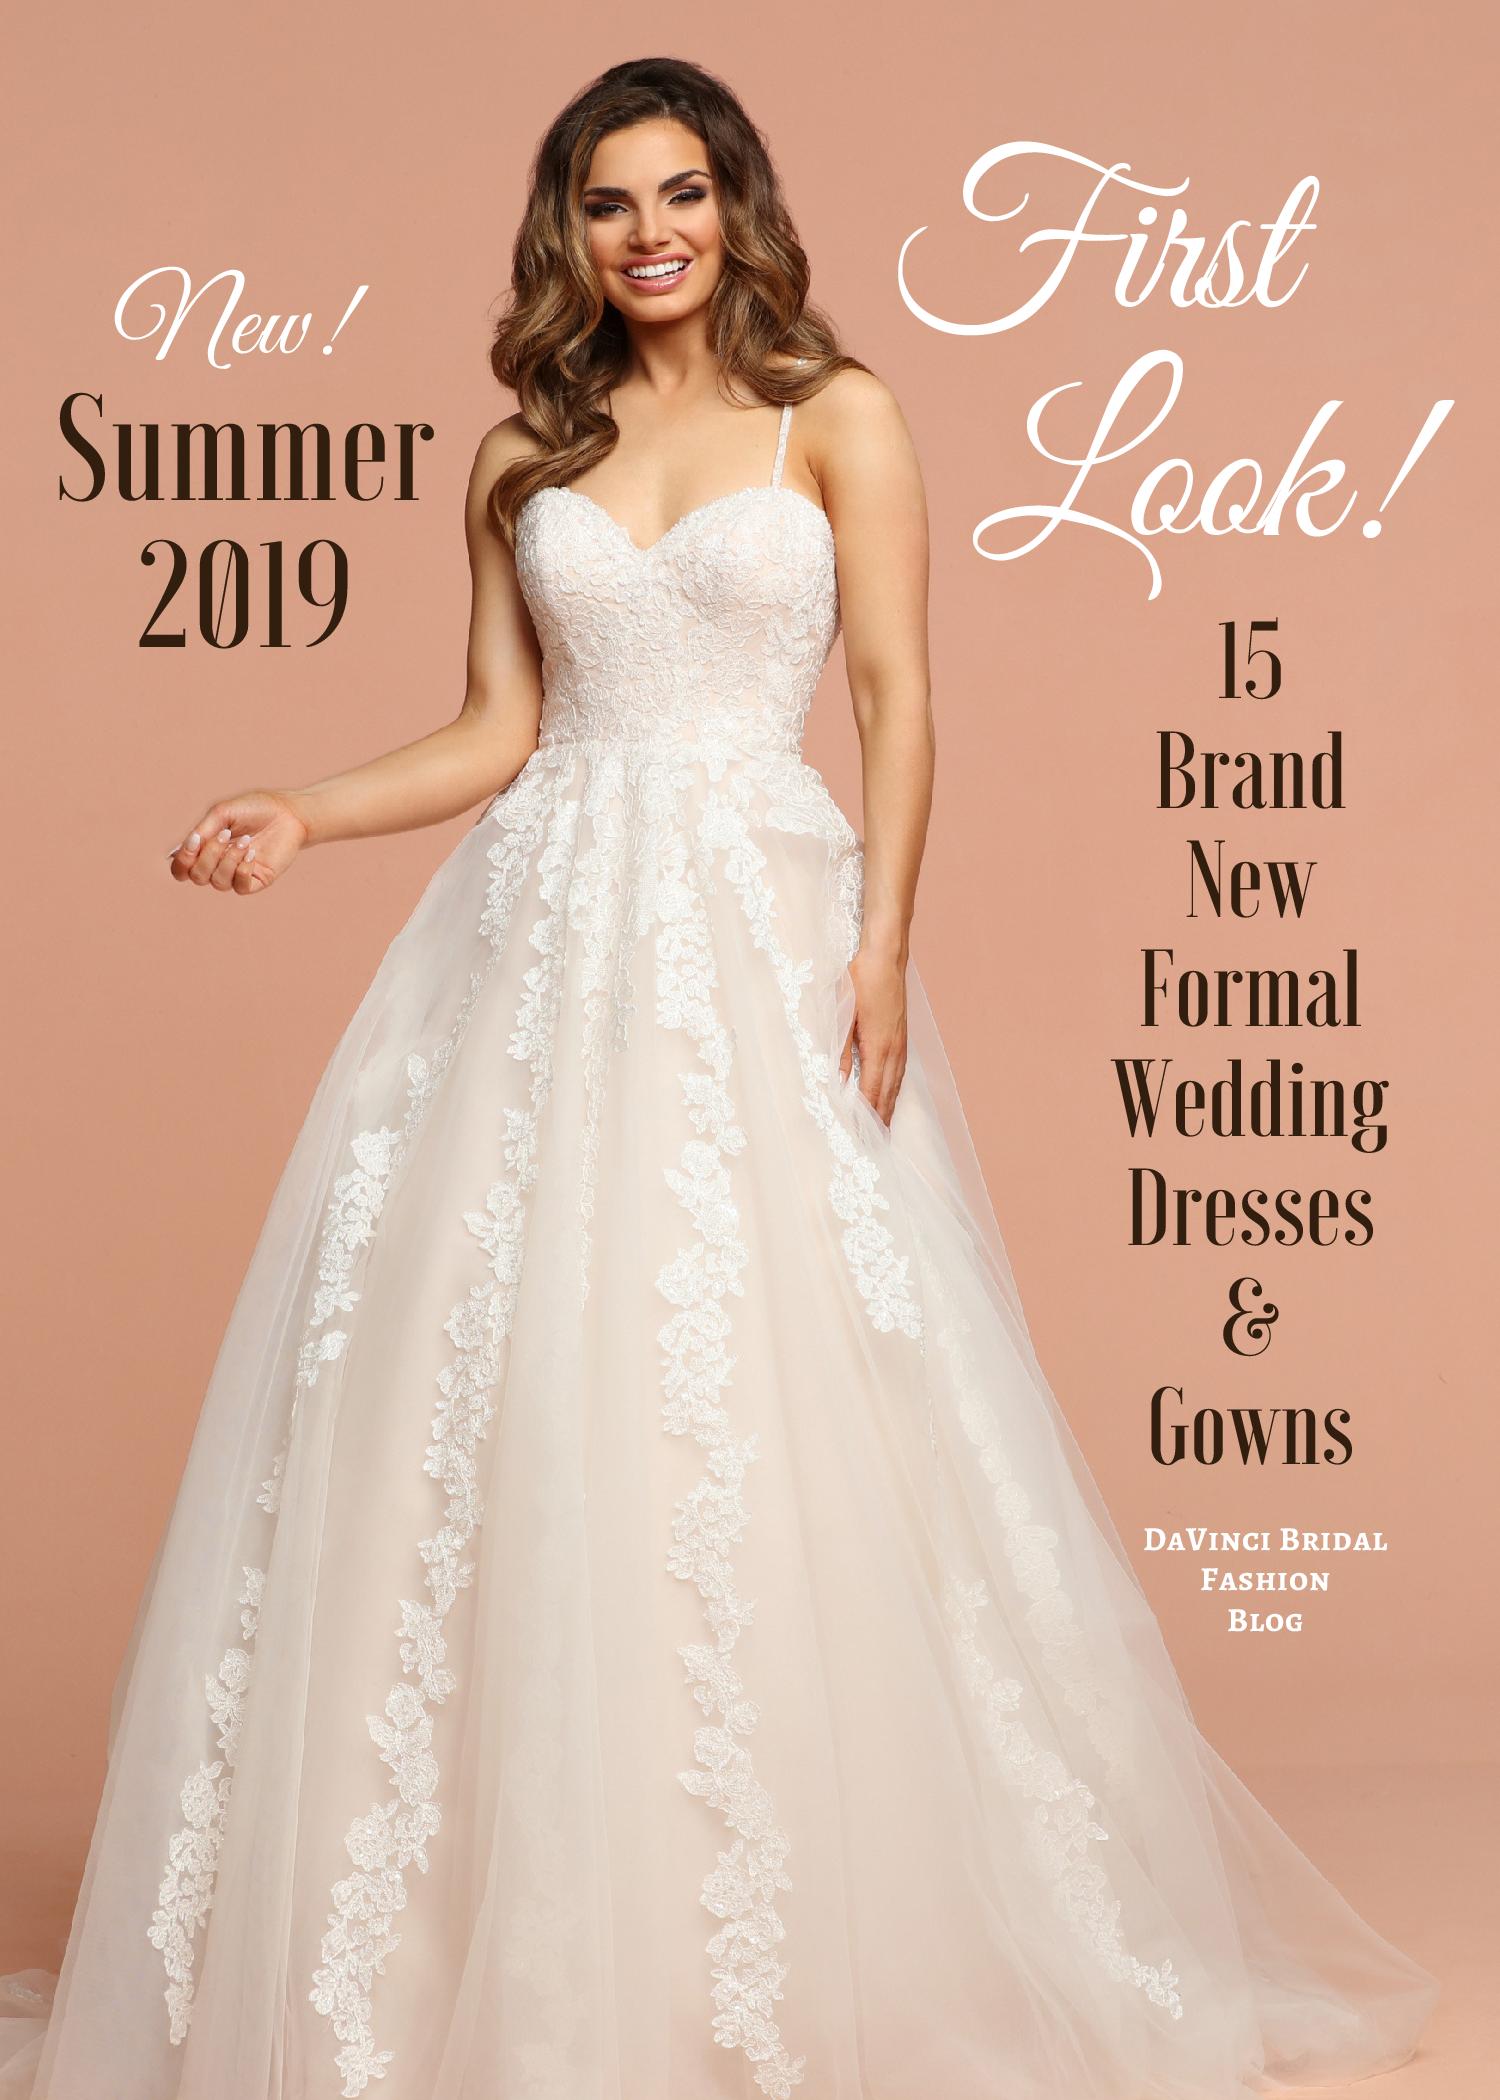 Summer 2019 Formal Wedding Dress Preview | DaVinci Bridal